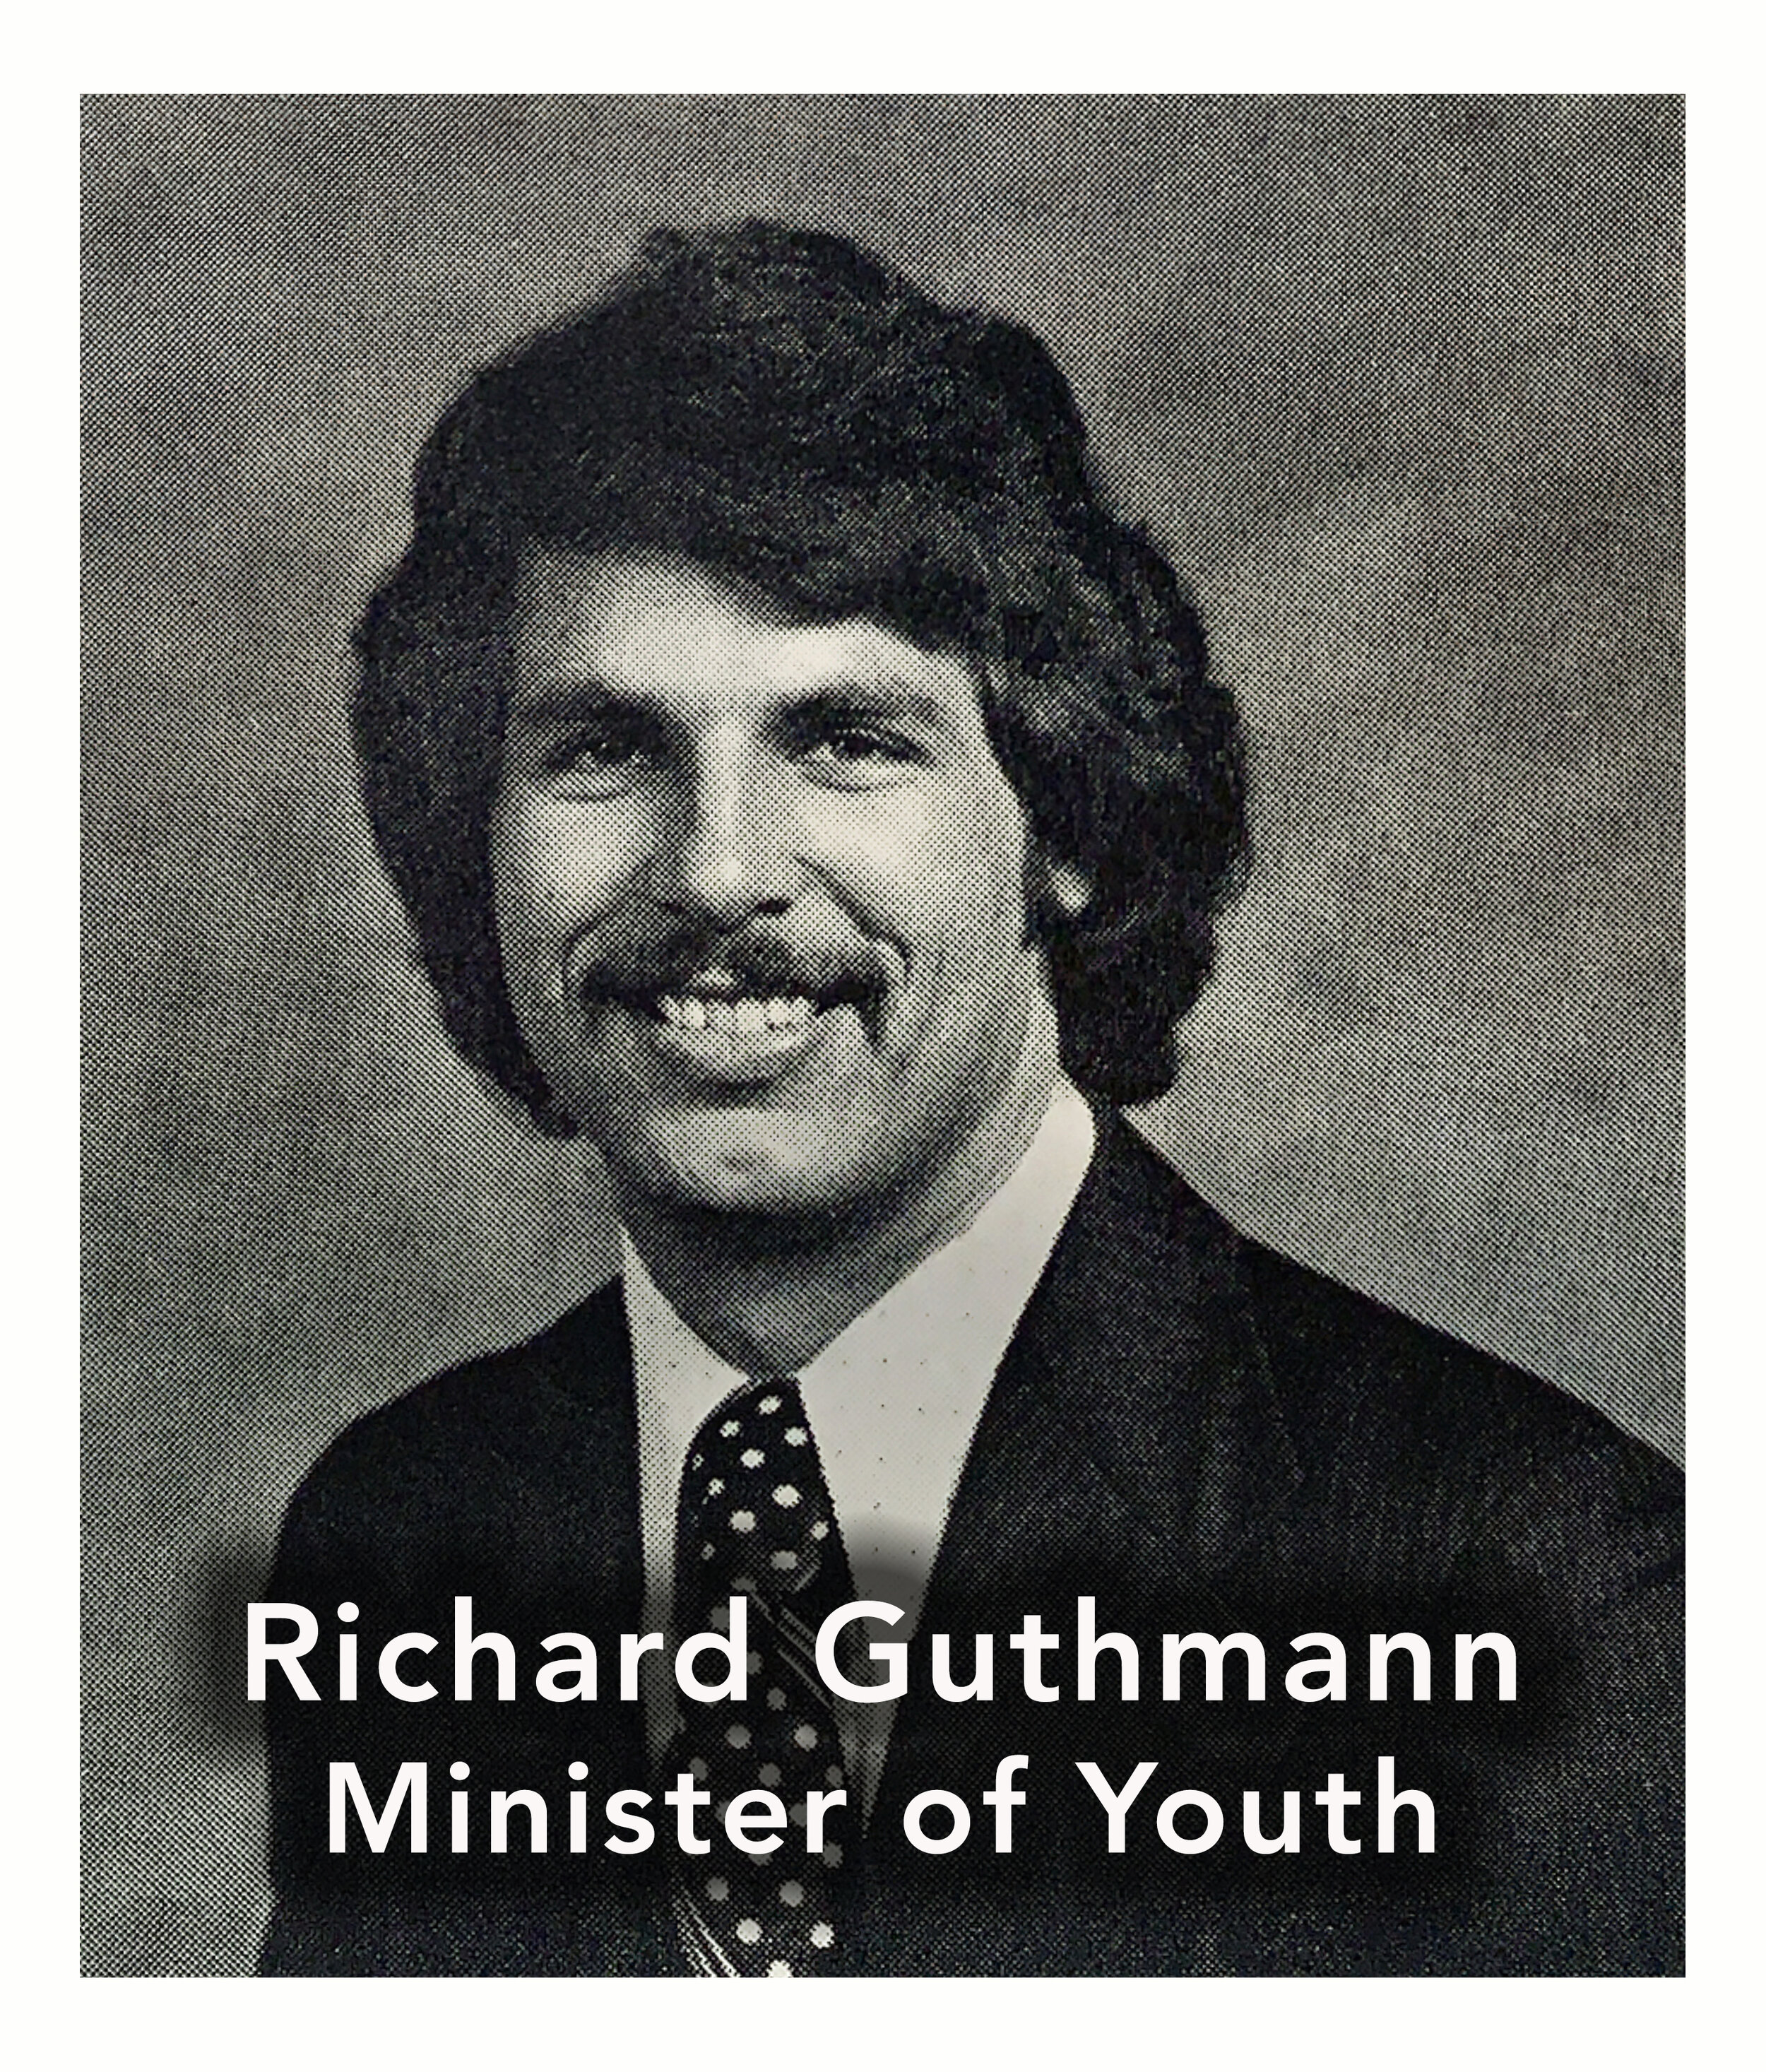 Rich Guthmann-title2.jpg